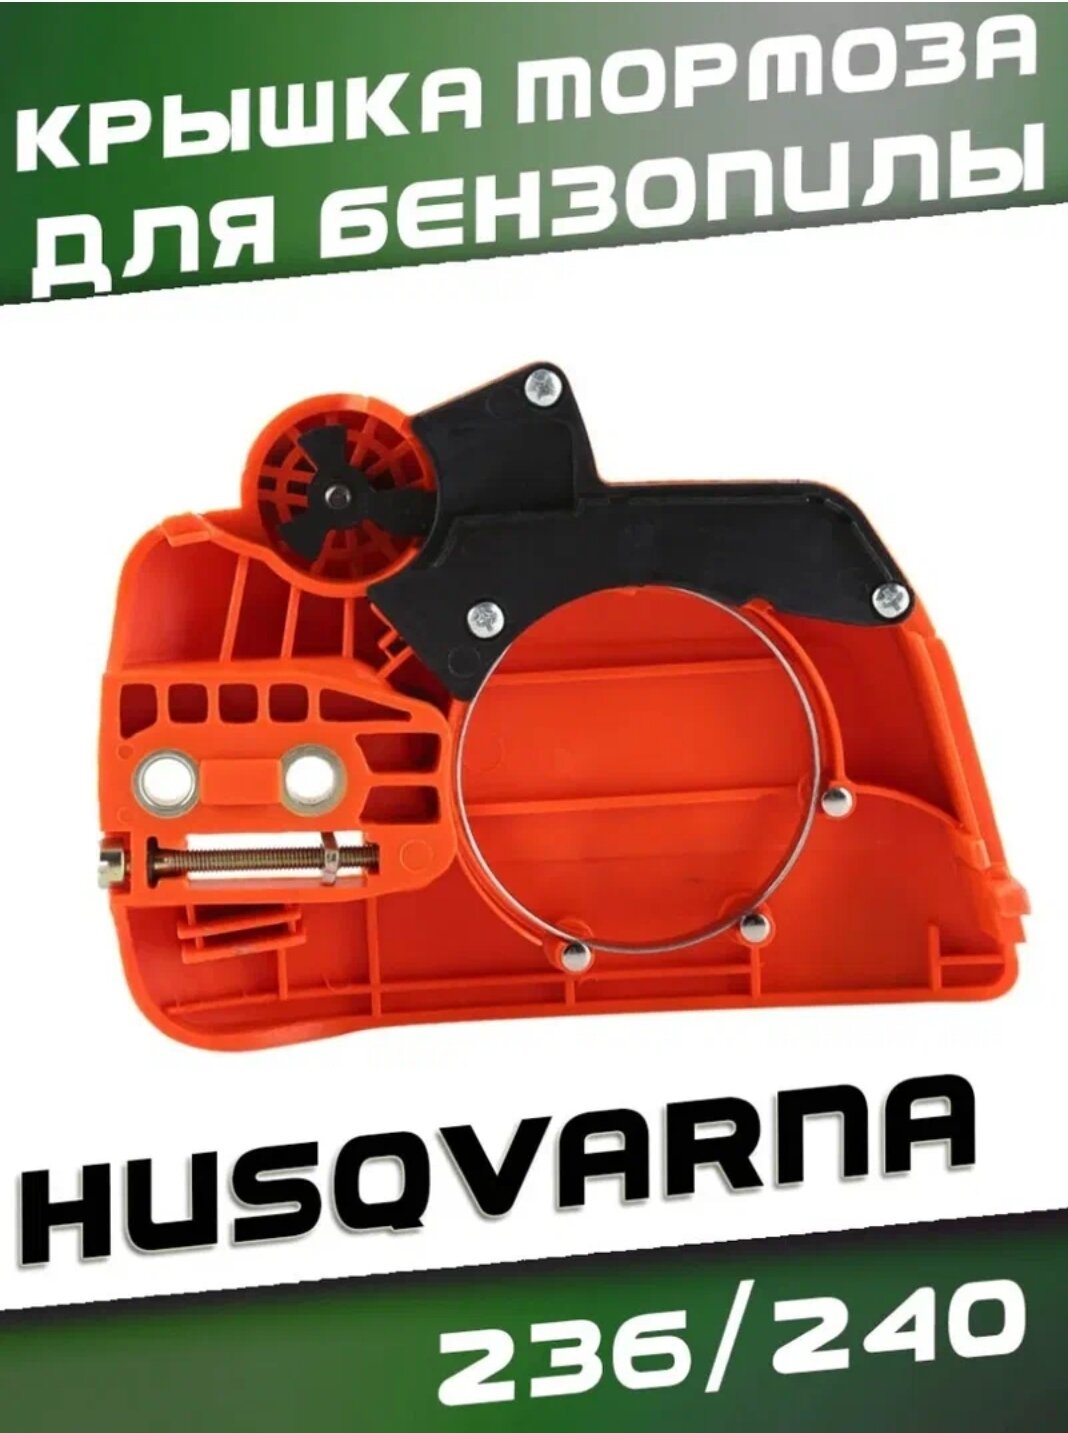 Крышка тормоза для бензопилы Husqvarna 236-240